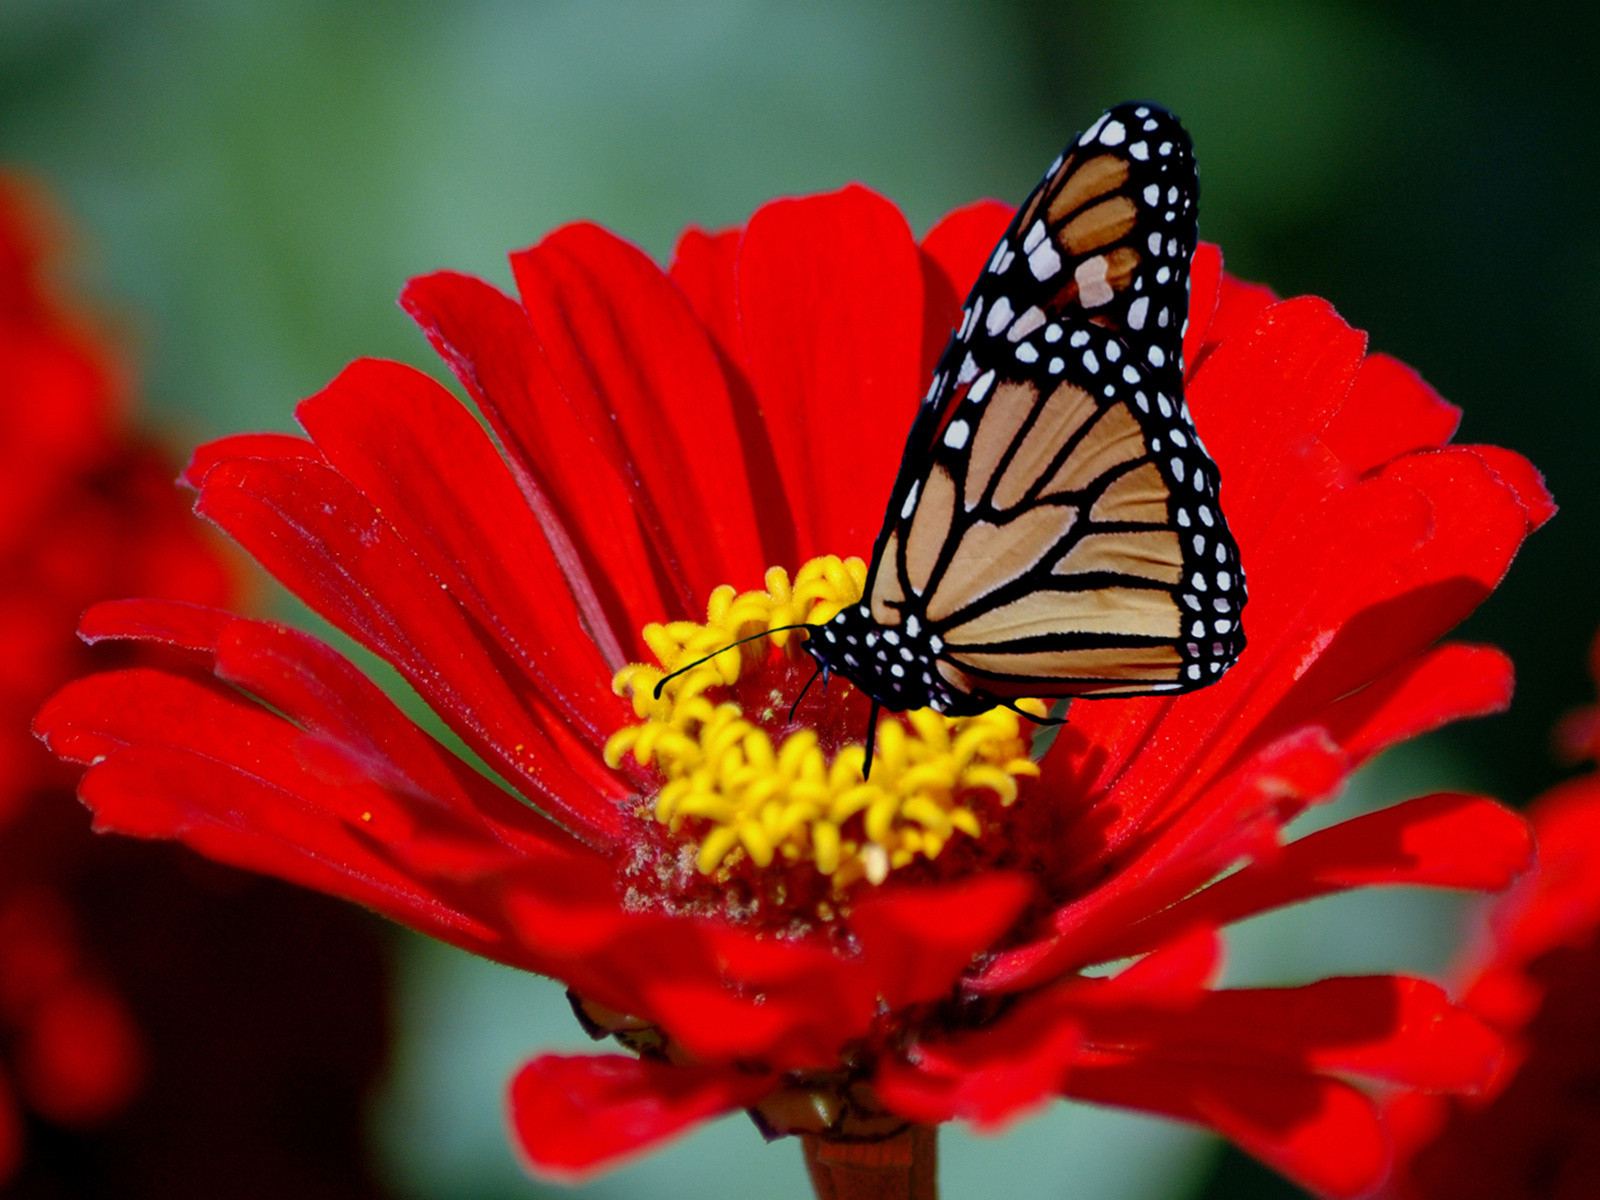 https://blogger.googleusercontent.com/img/b/R29vZ2xl/AVvXsEjCadQhVV7n5OchXucyzWujbXQuzxVVVAdaNWvU3lPNvcFWlcqf9cYsiDiELK9RJVjNoQLrwtAlPiYy4QnXujU9YquBaz5pbJ9__ErJd2xEhbTL5tj-4OdyGLfSSCLYWJK8M48nvj48bsY/s1600/Butterfly+on+a+Red+Flower.jpg